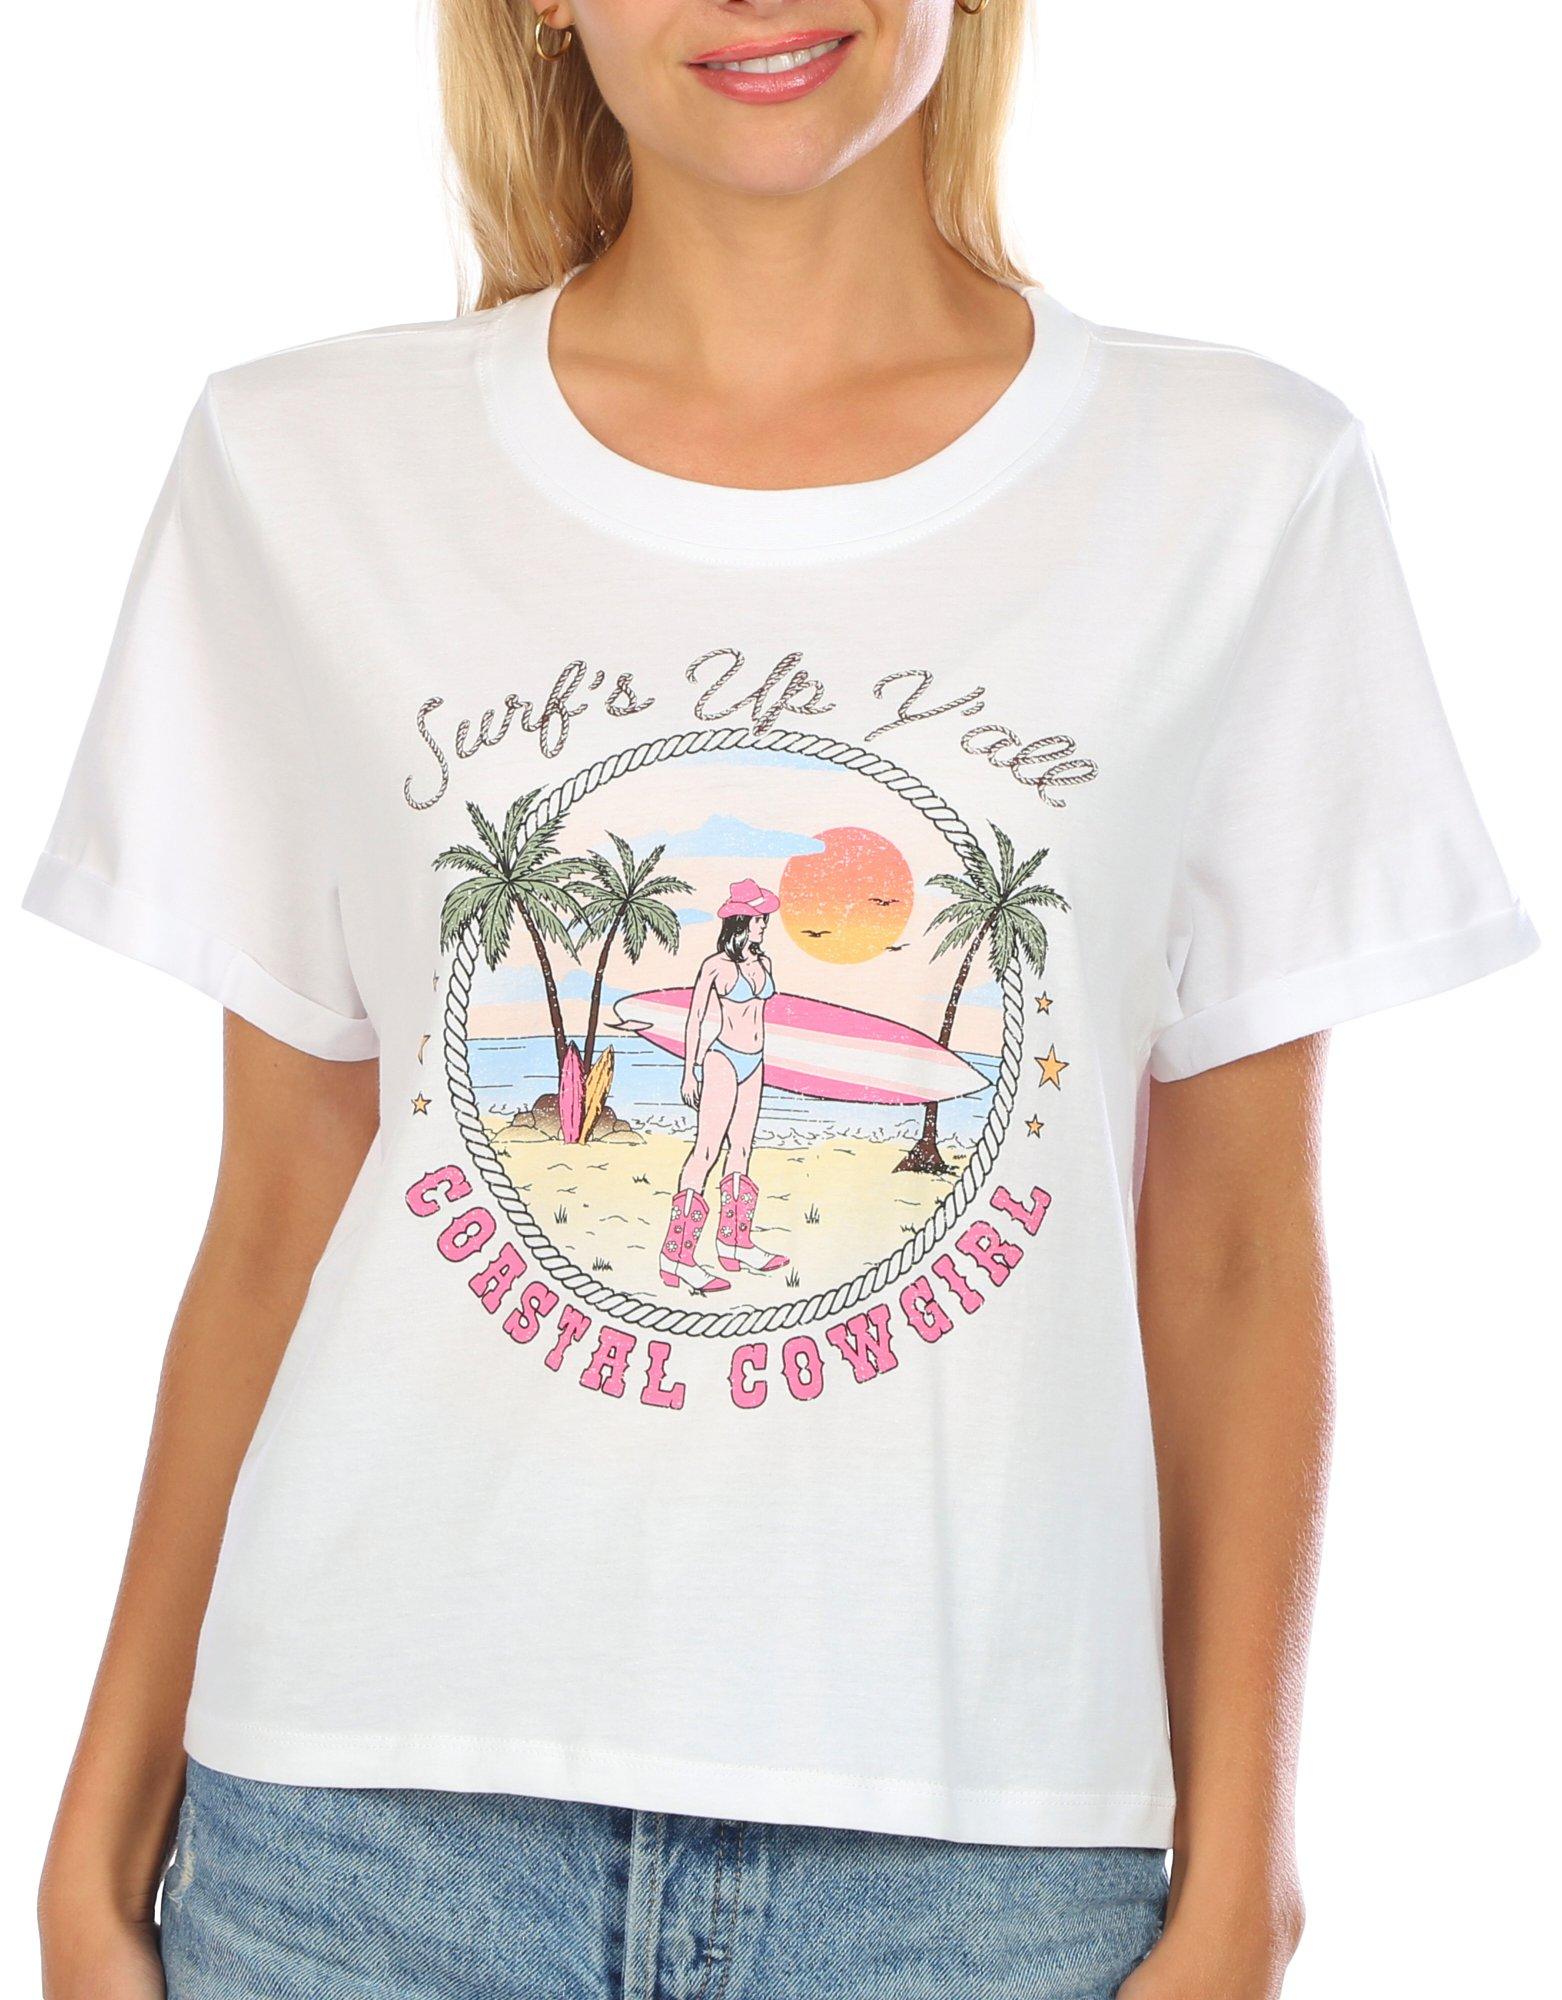 Coastal Dreamer Juniors Surfs Up T-shirt